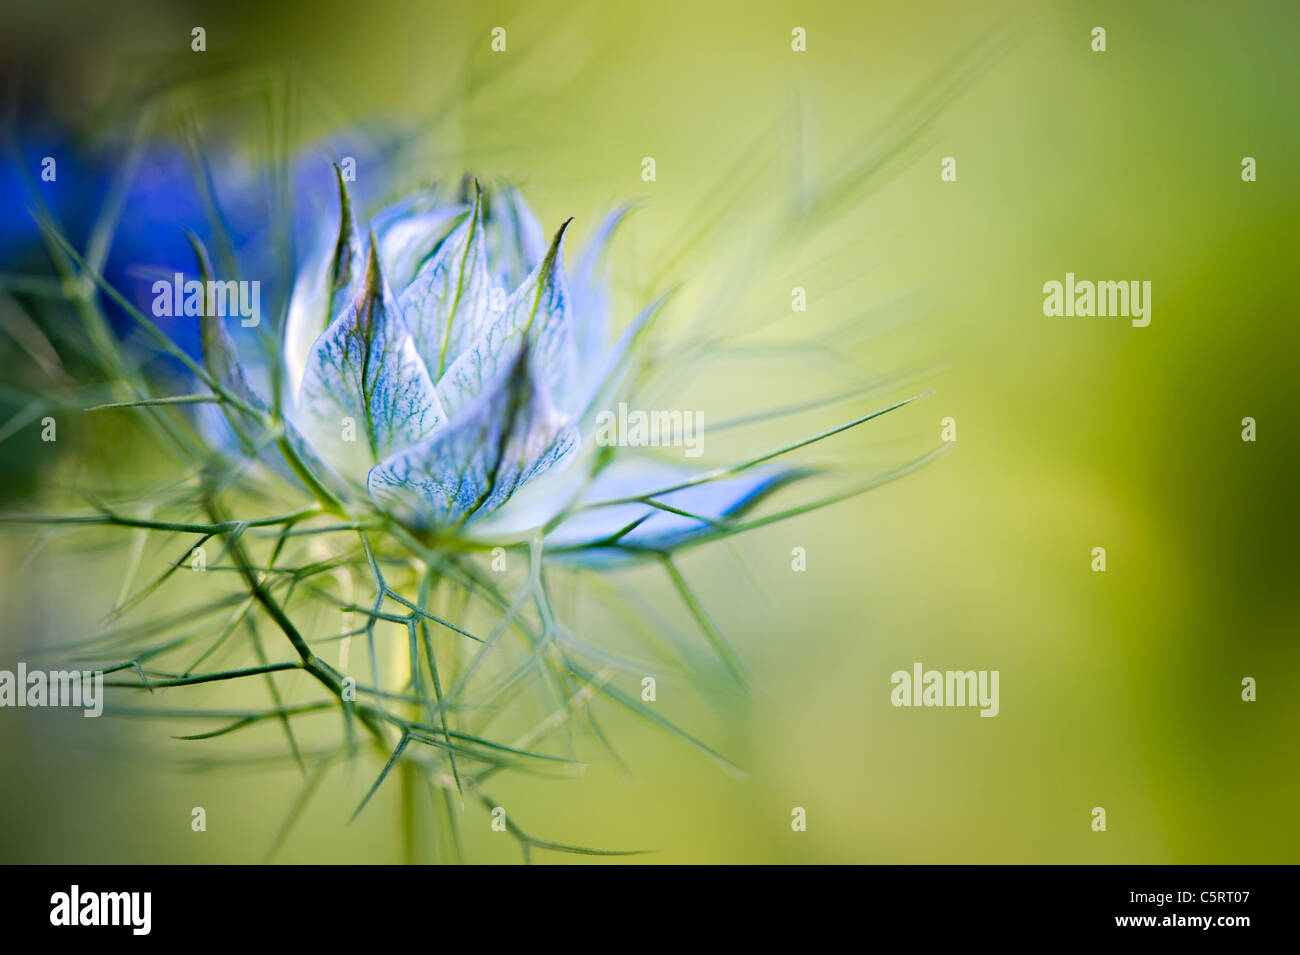 A Love-in-a-mist flower opening -  Nigella damascena Stock Photo